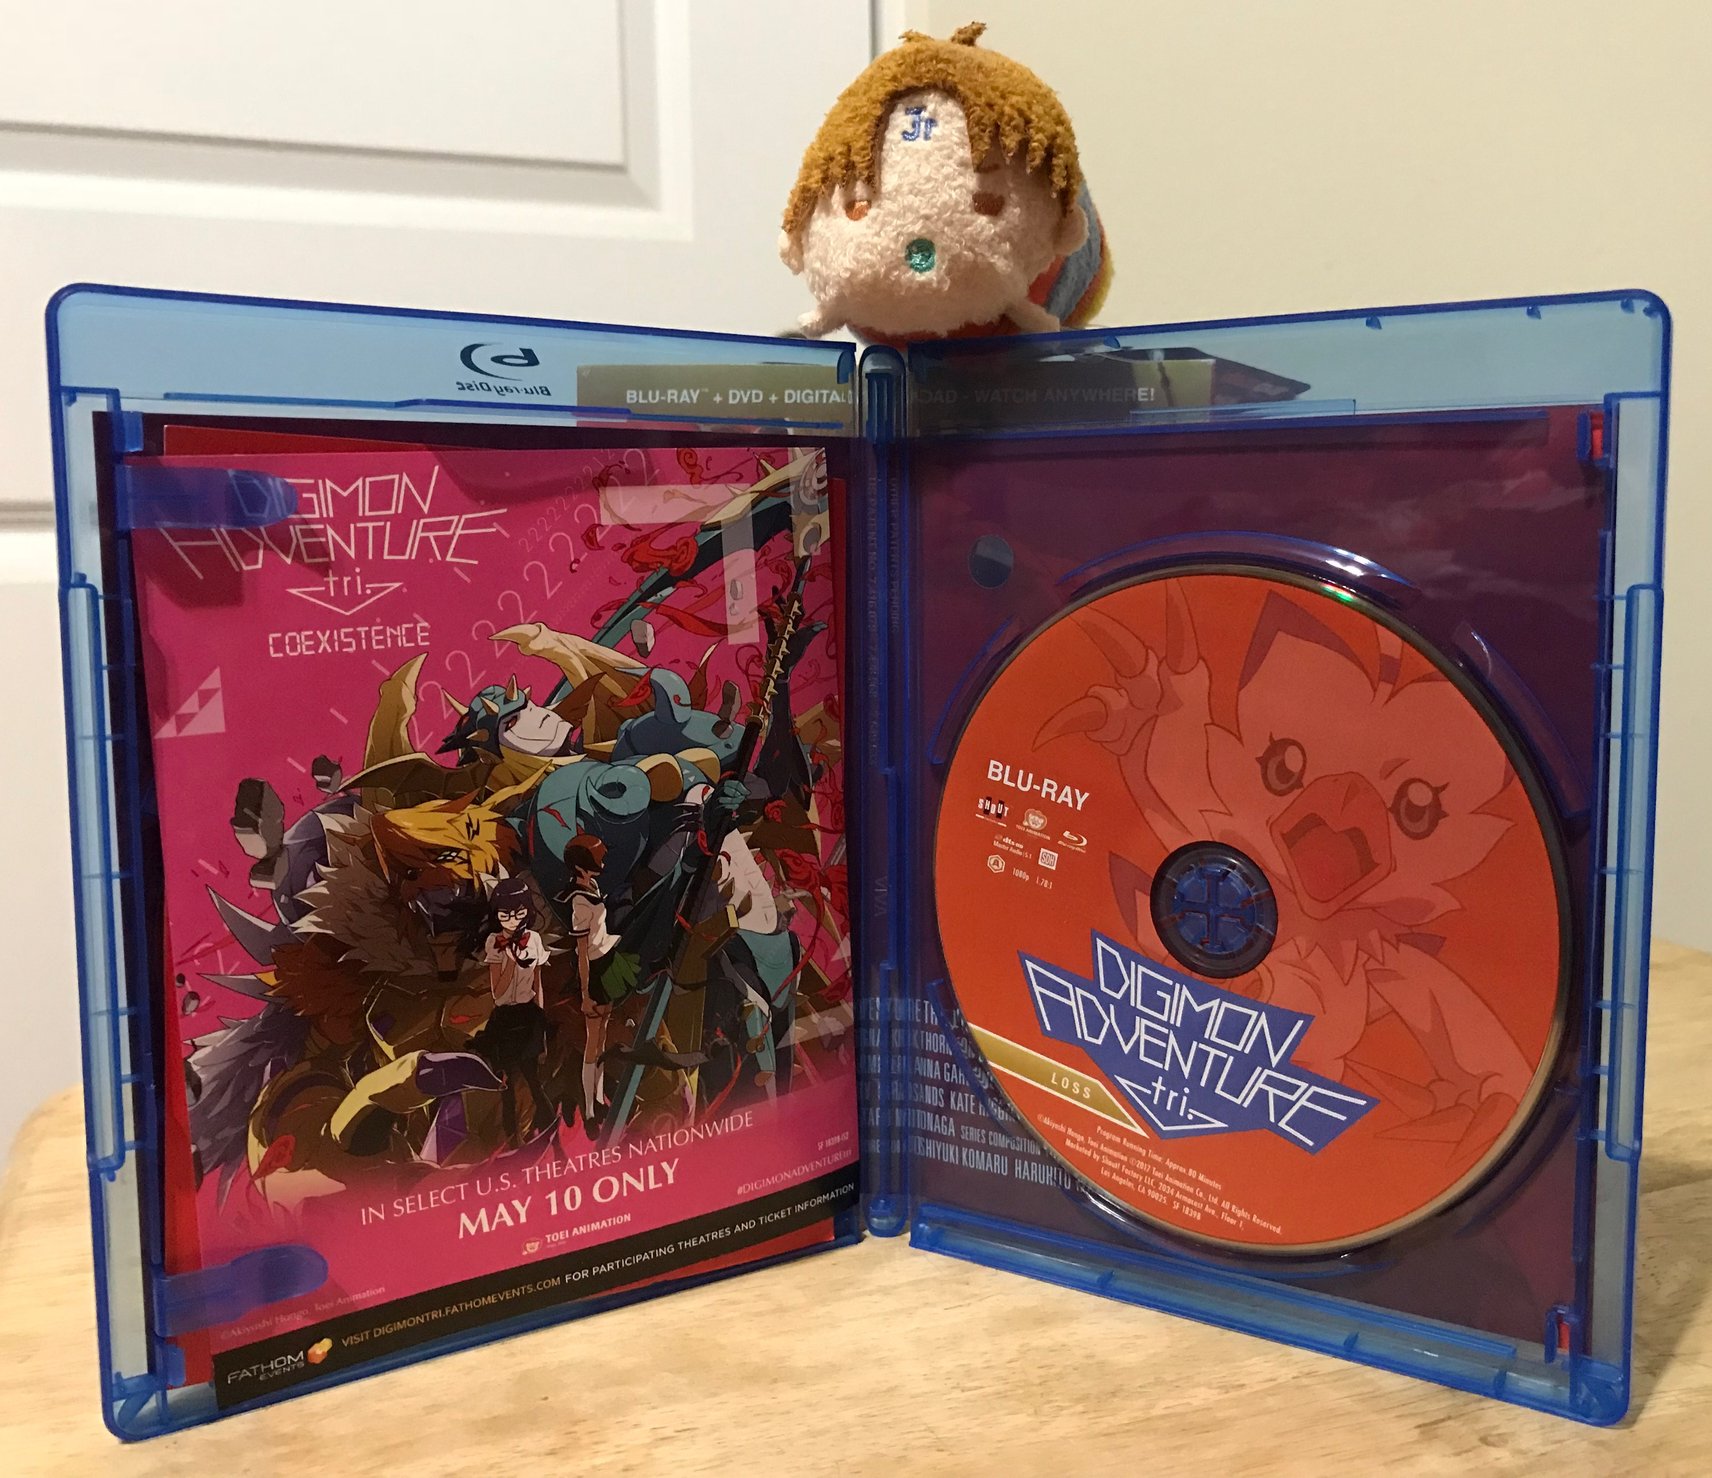 Digimon Adventure tri.: Coexistence (Blu-ray + DVD + Digital